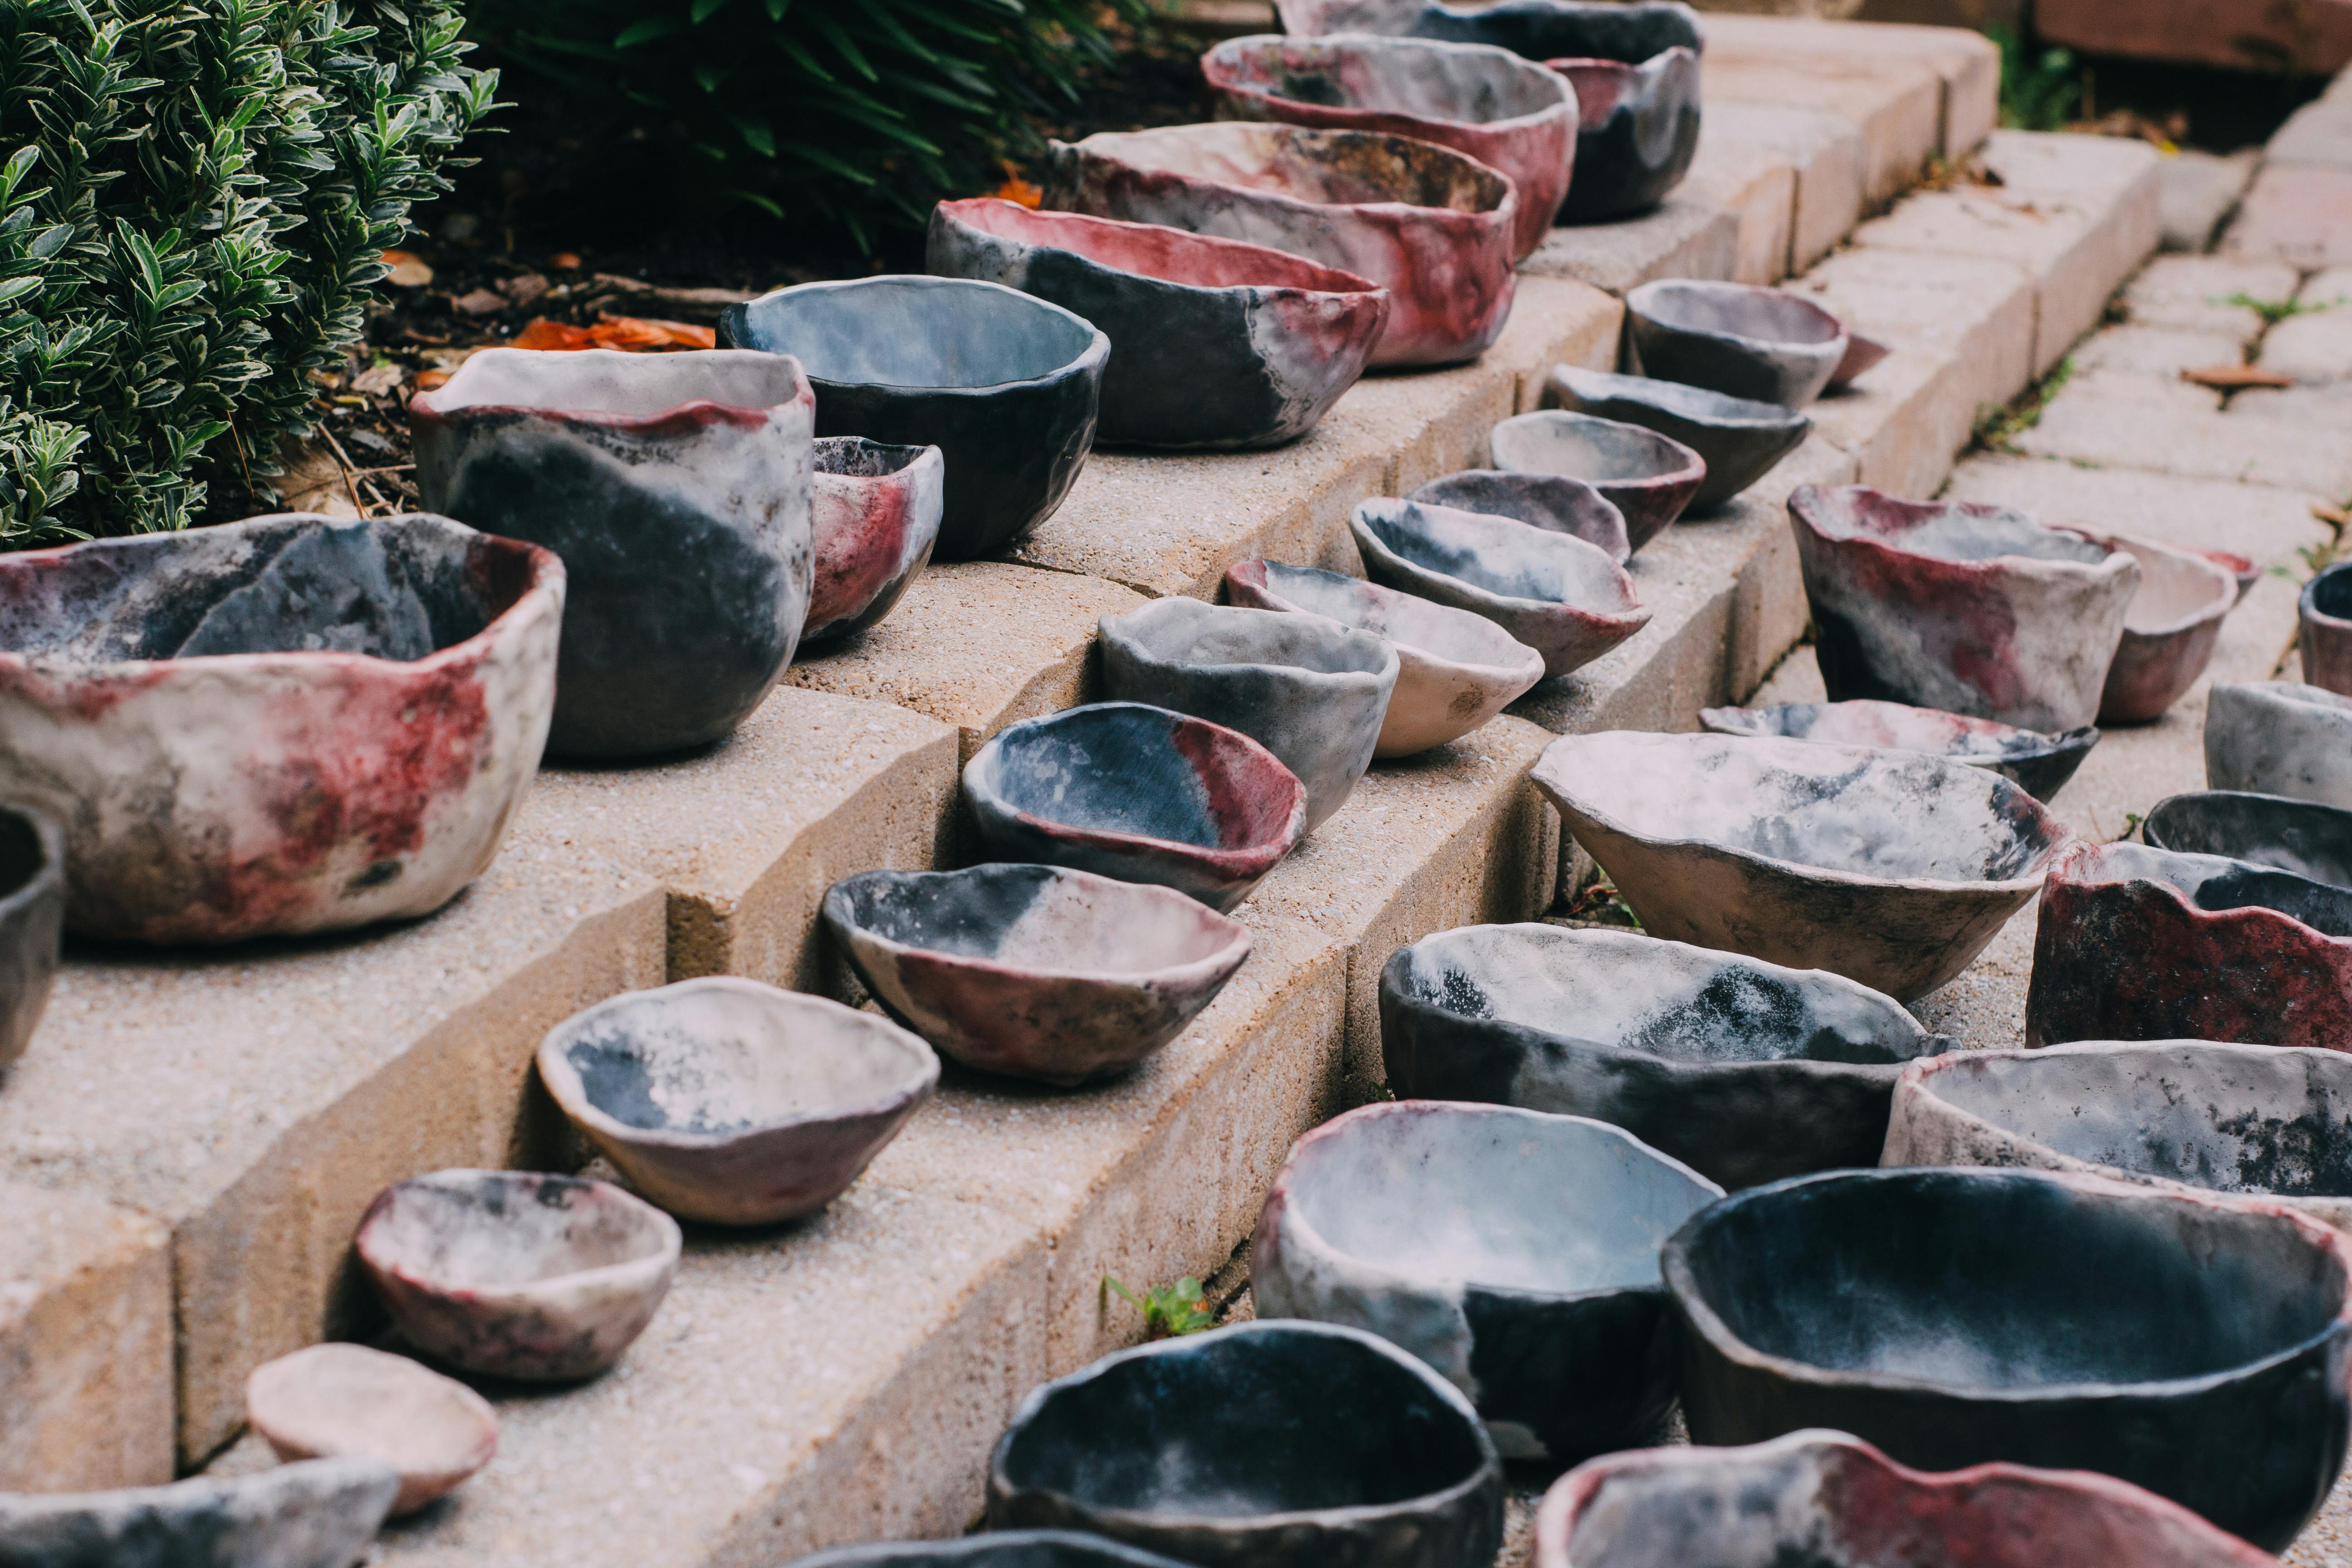 various handshaped earthtoned bowls arranged on brick steps